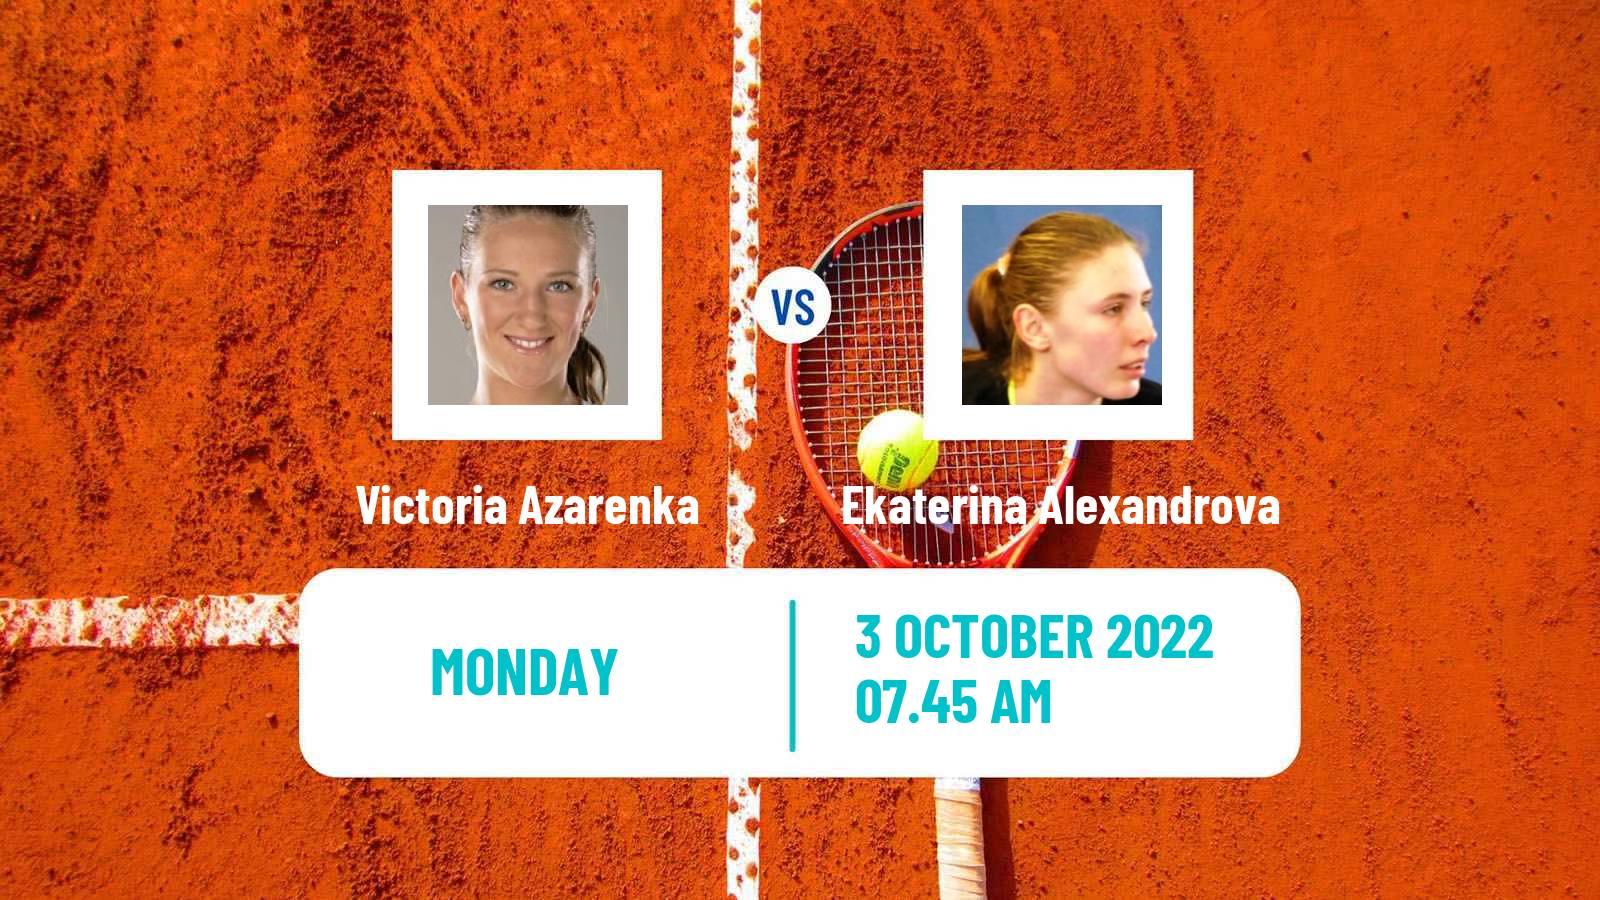 Tennis WTA Ostrava Victoria Azarenka - Ekaterina Alexandrova